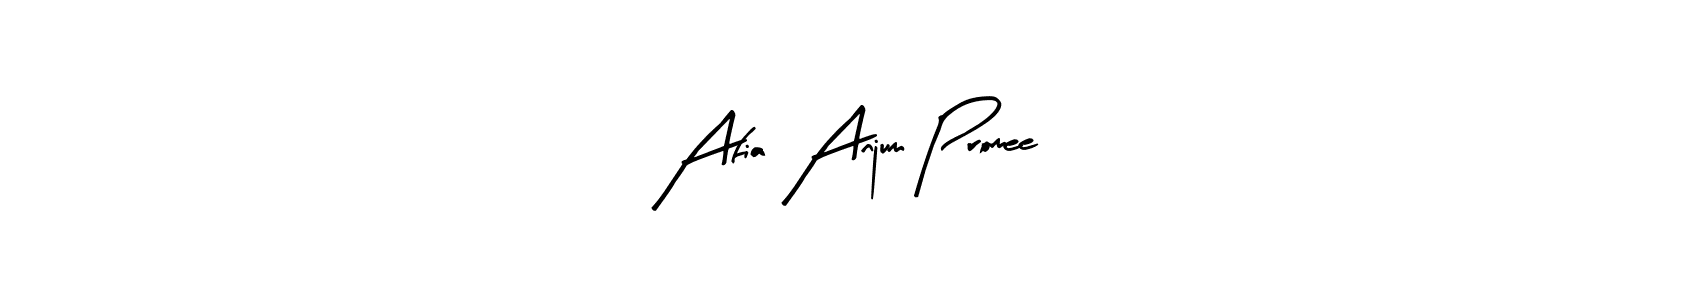 Make a beautiful signature design for name Afia Anjum Promee. Use this online signature maker to create a handwritten signature for free. Afia Anjum Promee signature style 8 images and pictures png